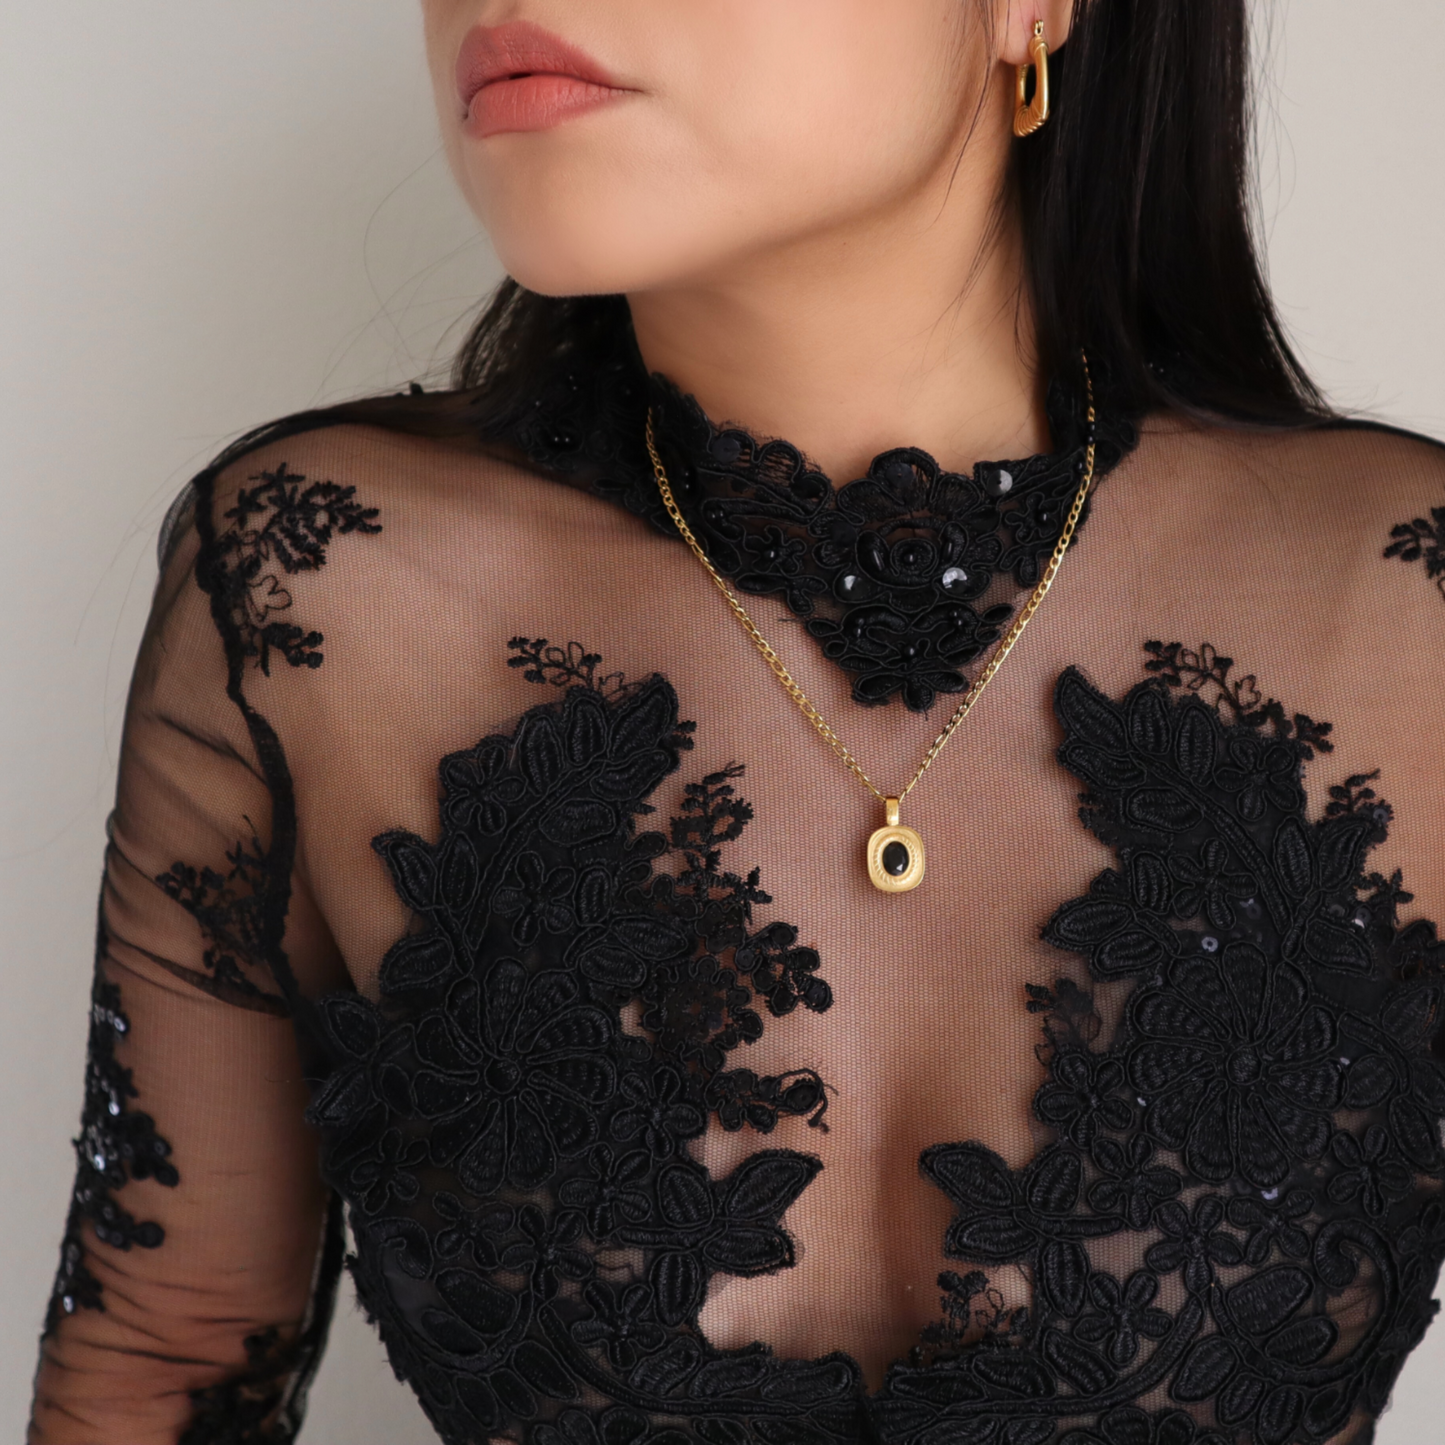 Teoma Black Vintage Necklace